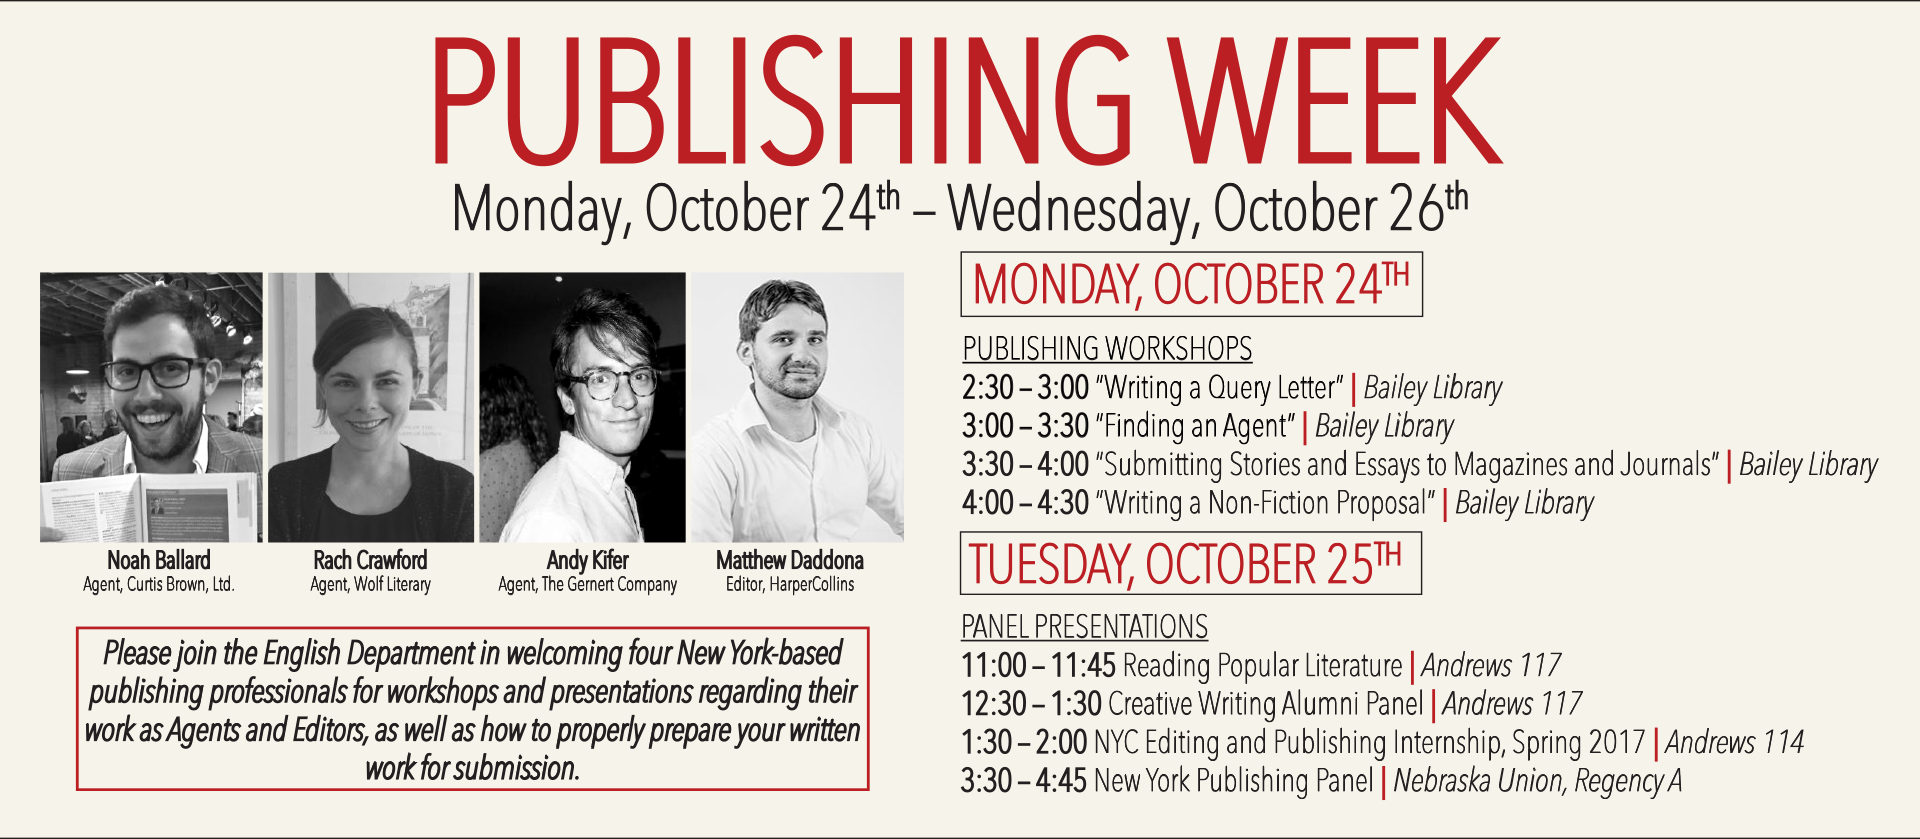 Poster for Publishing Week - info below